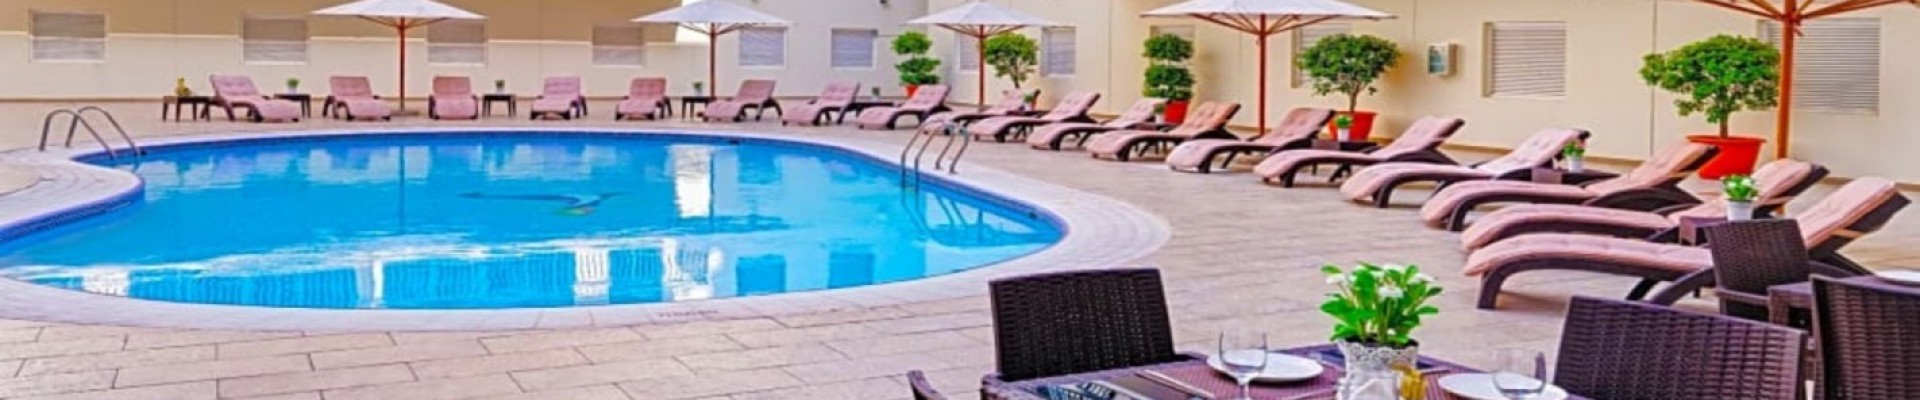 3* Golden Sands 3 Hotel Apartment - Dubai Package (5 Nights)